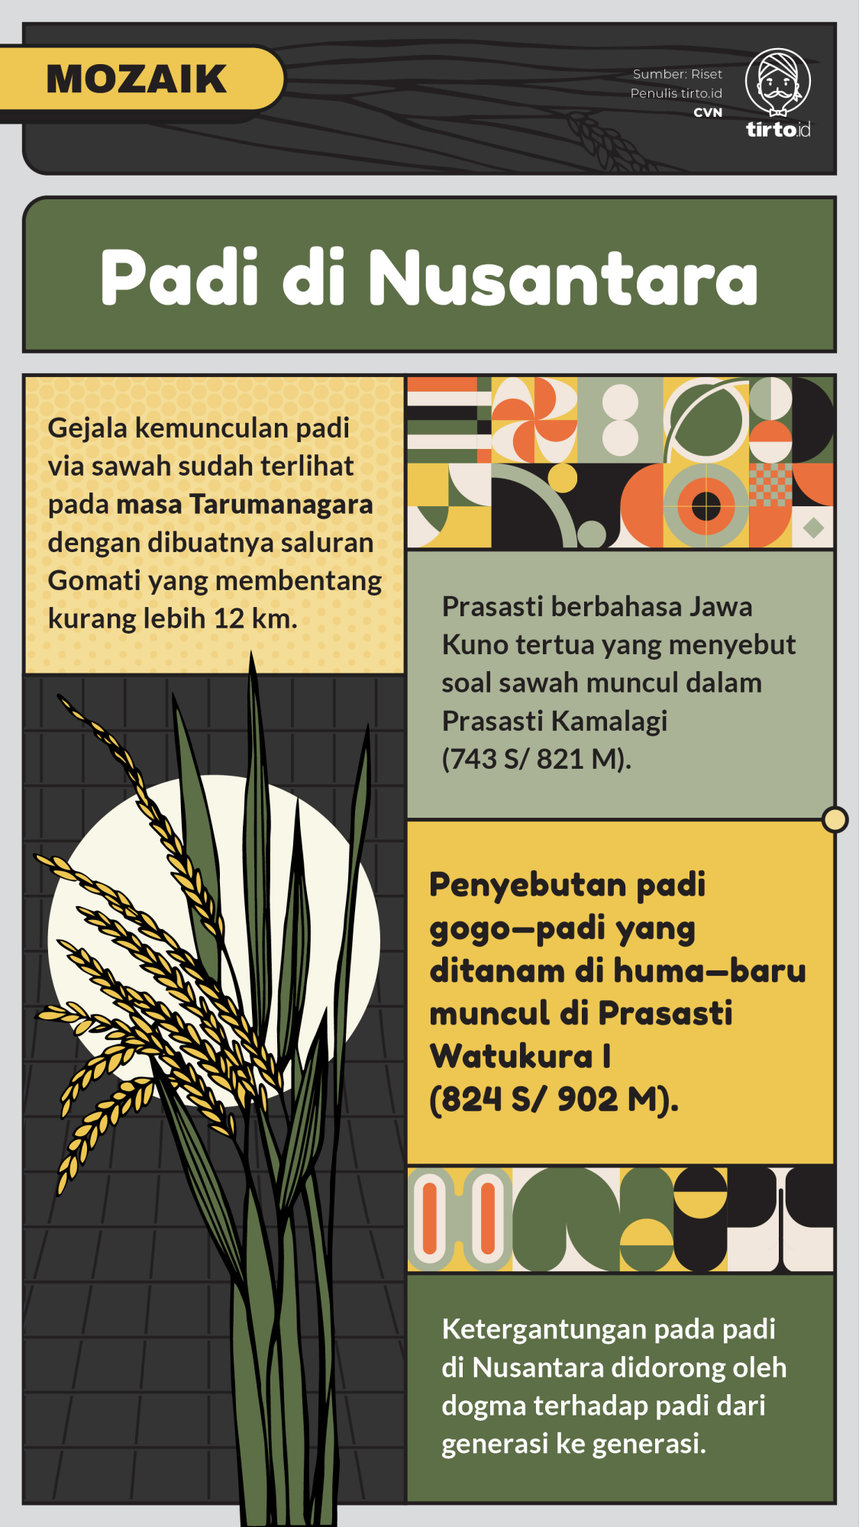 Infografik Mozaik Padi di Nusantara